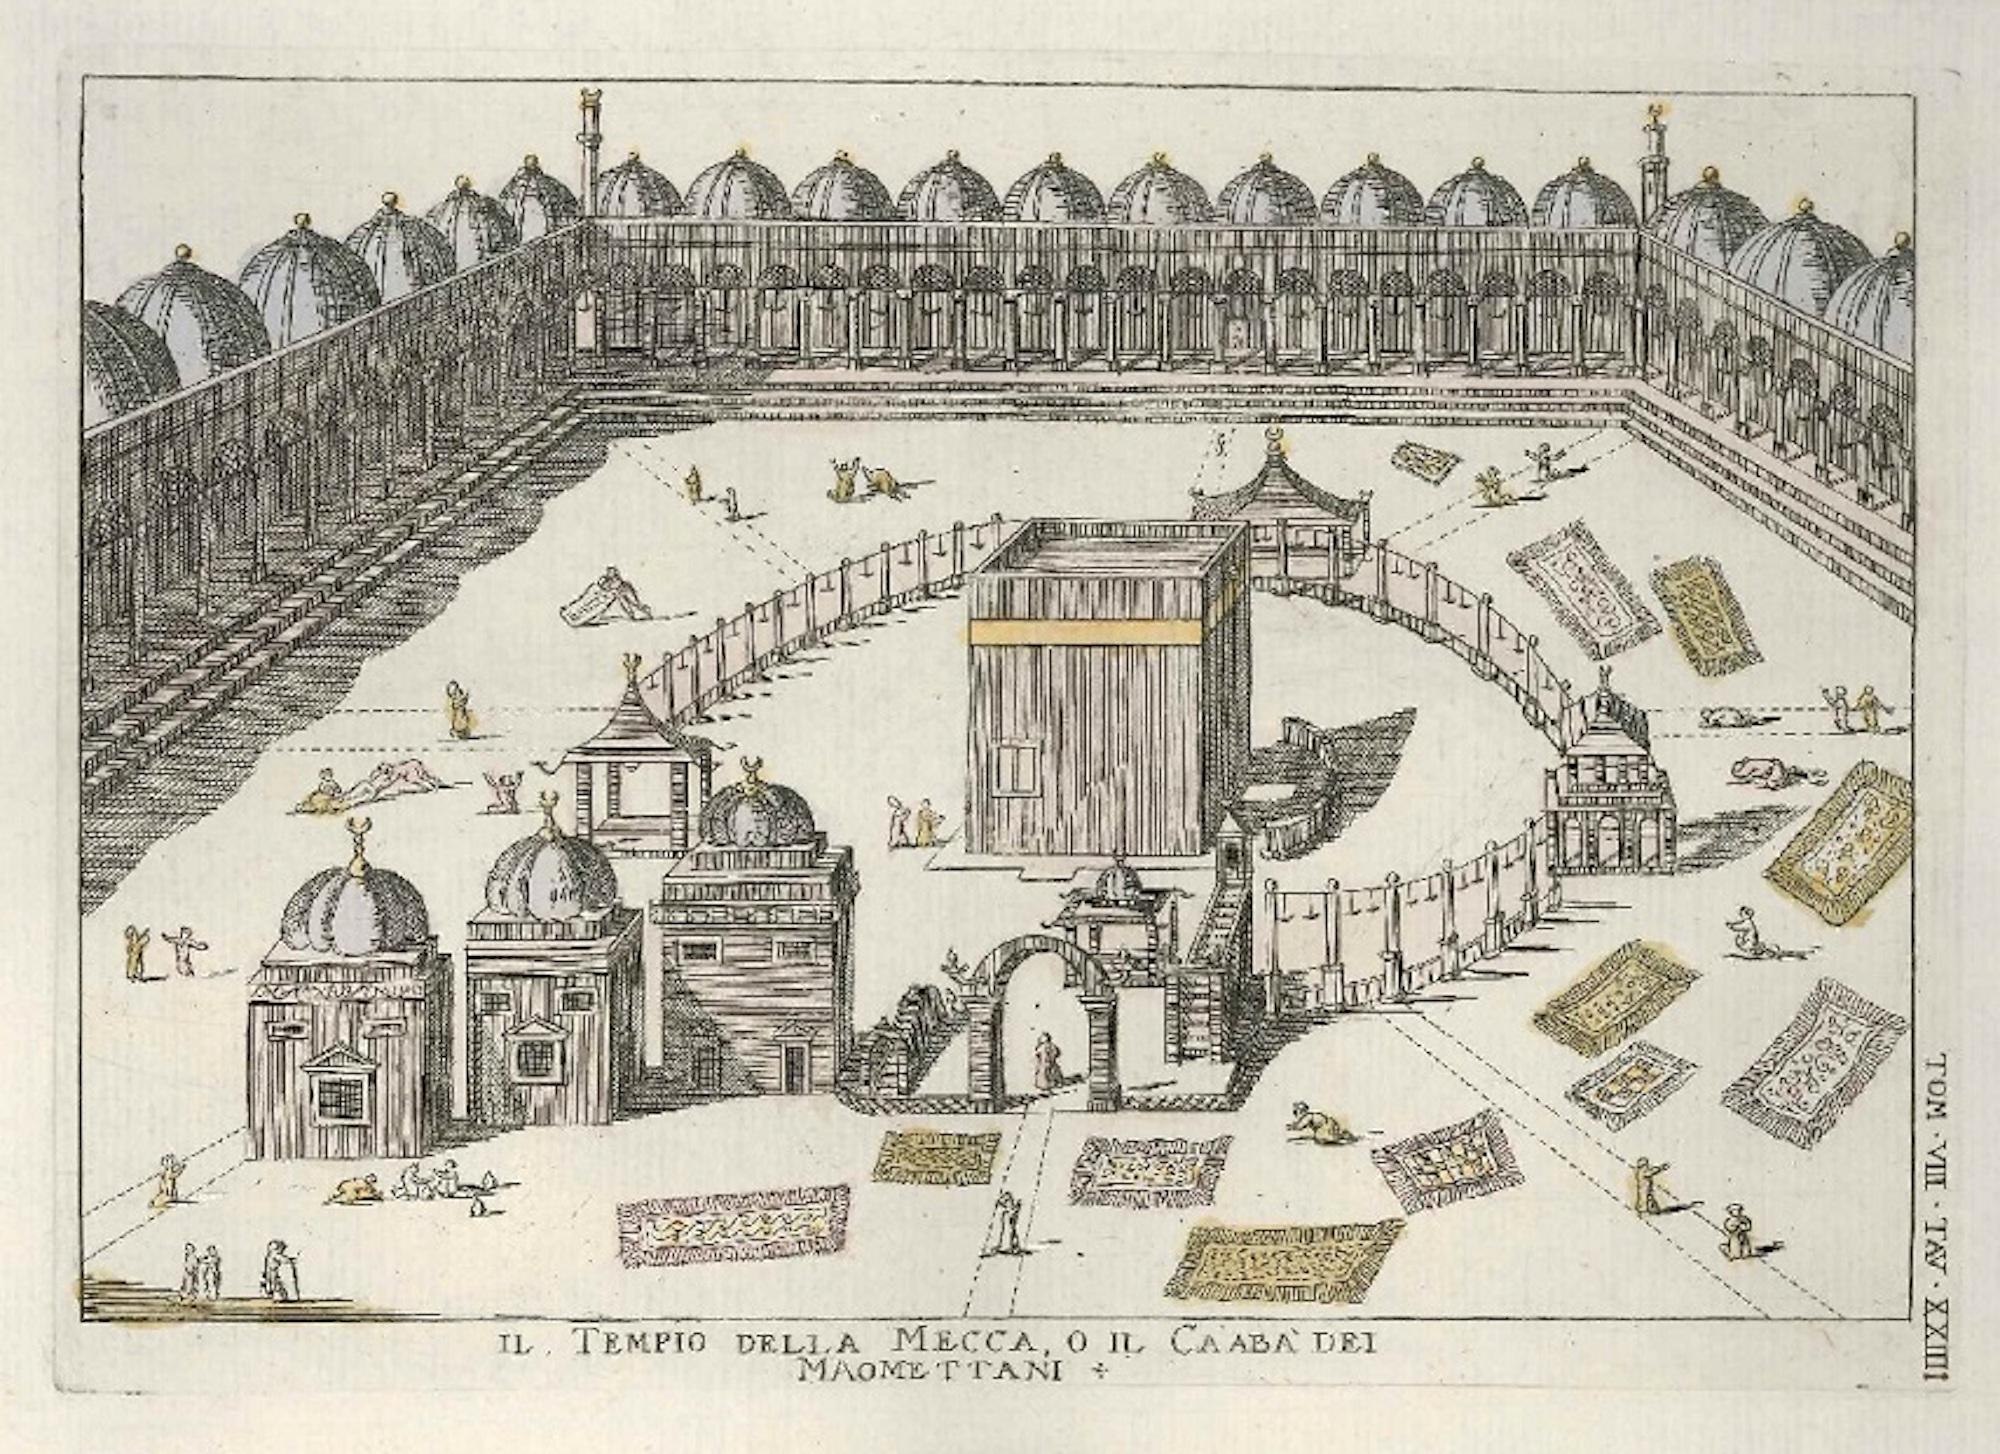 Gianfrancesco Pivati Figurative Print - Mecca Temple or the Ka'ba of Muhammadans - by G. Pivati - 1746-1751